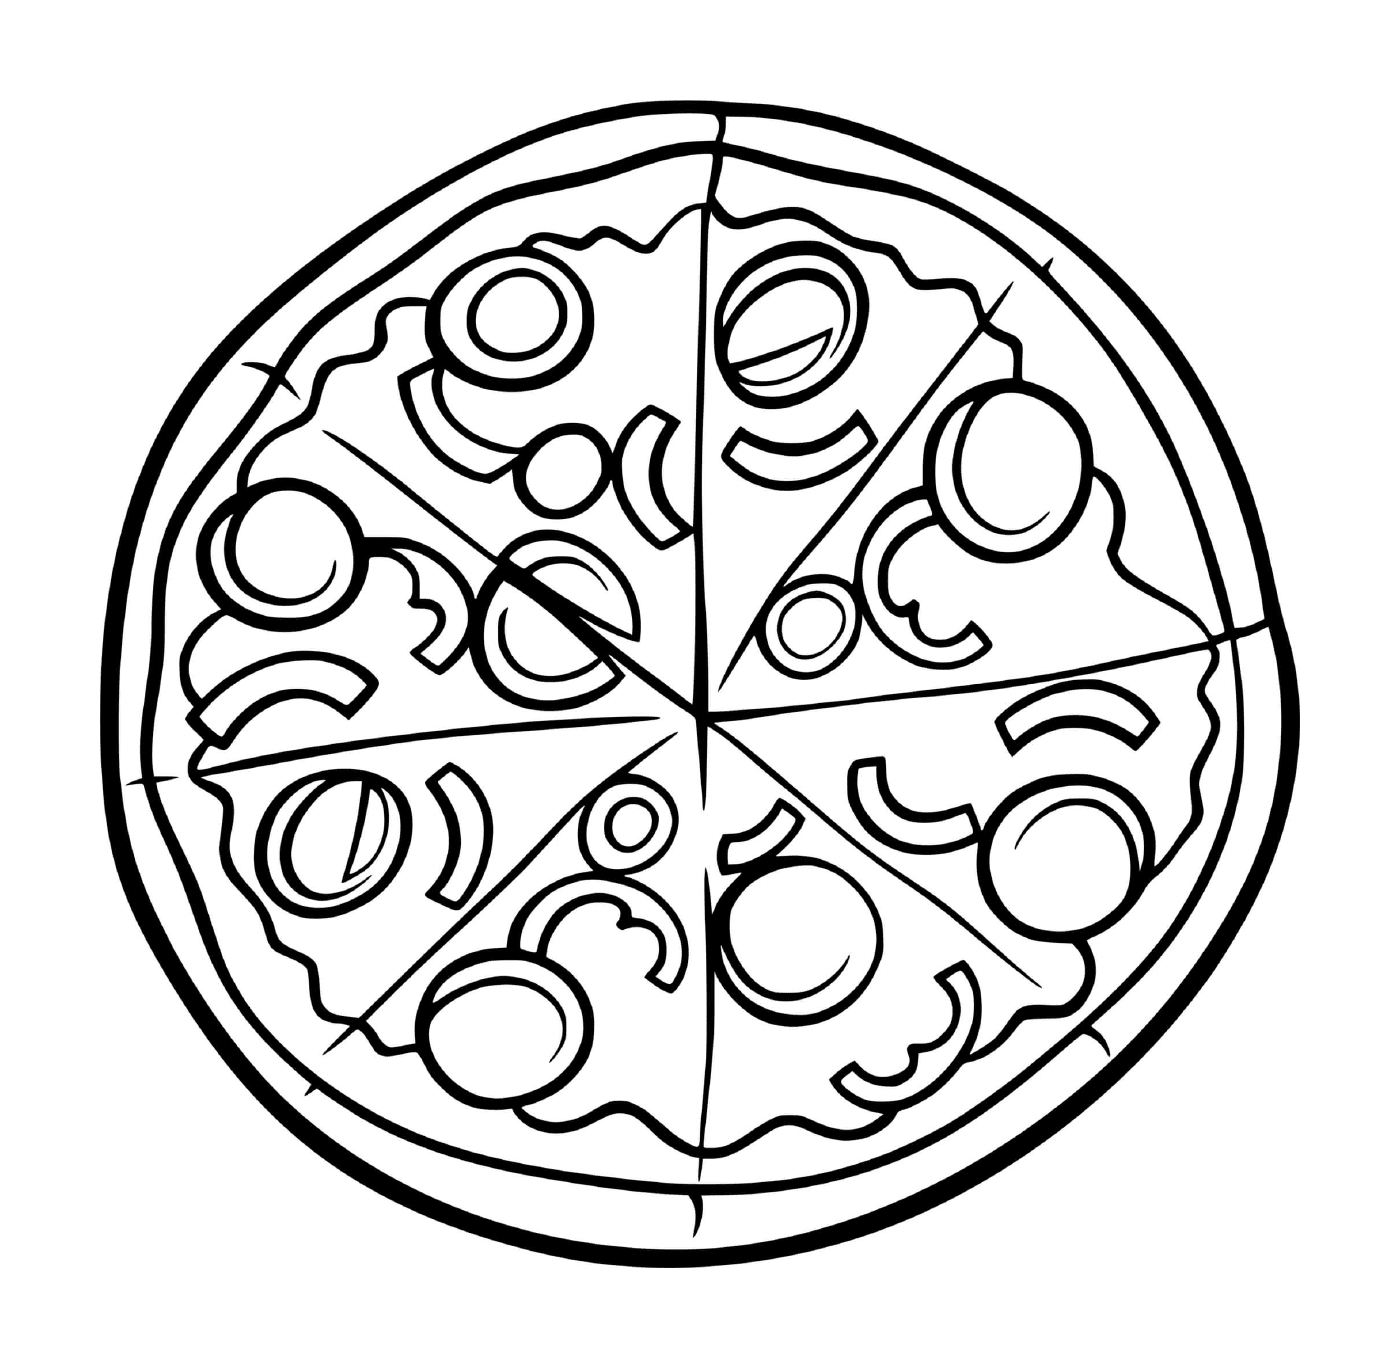  An artisanal pizza from California 